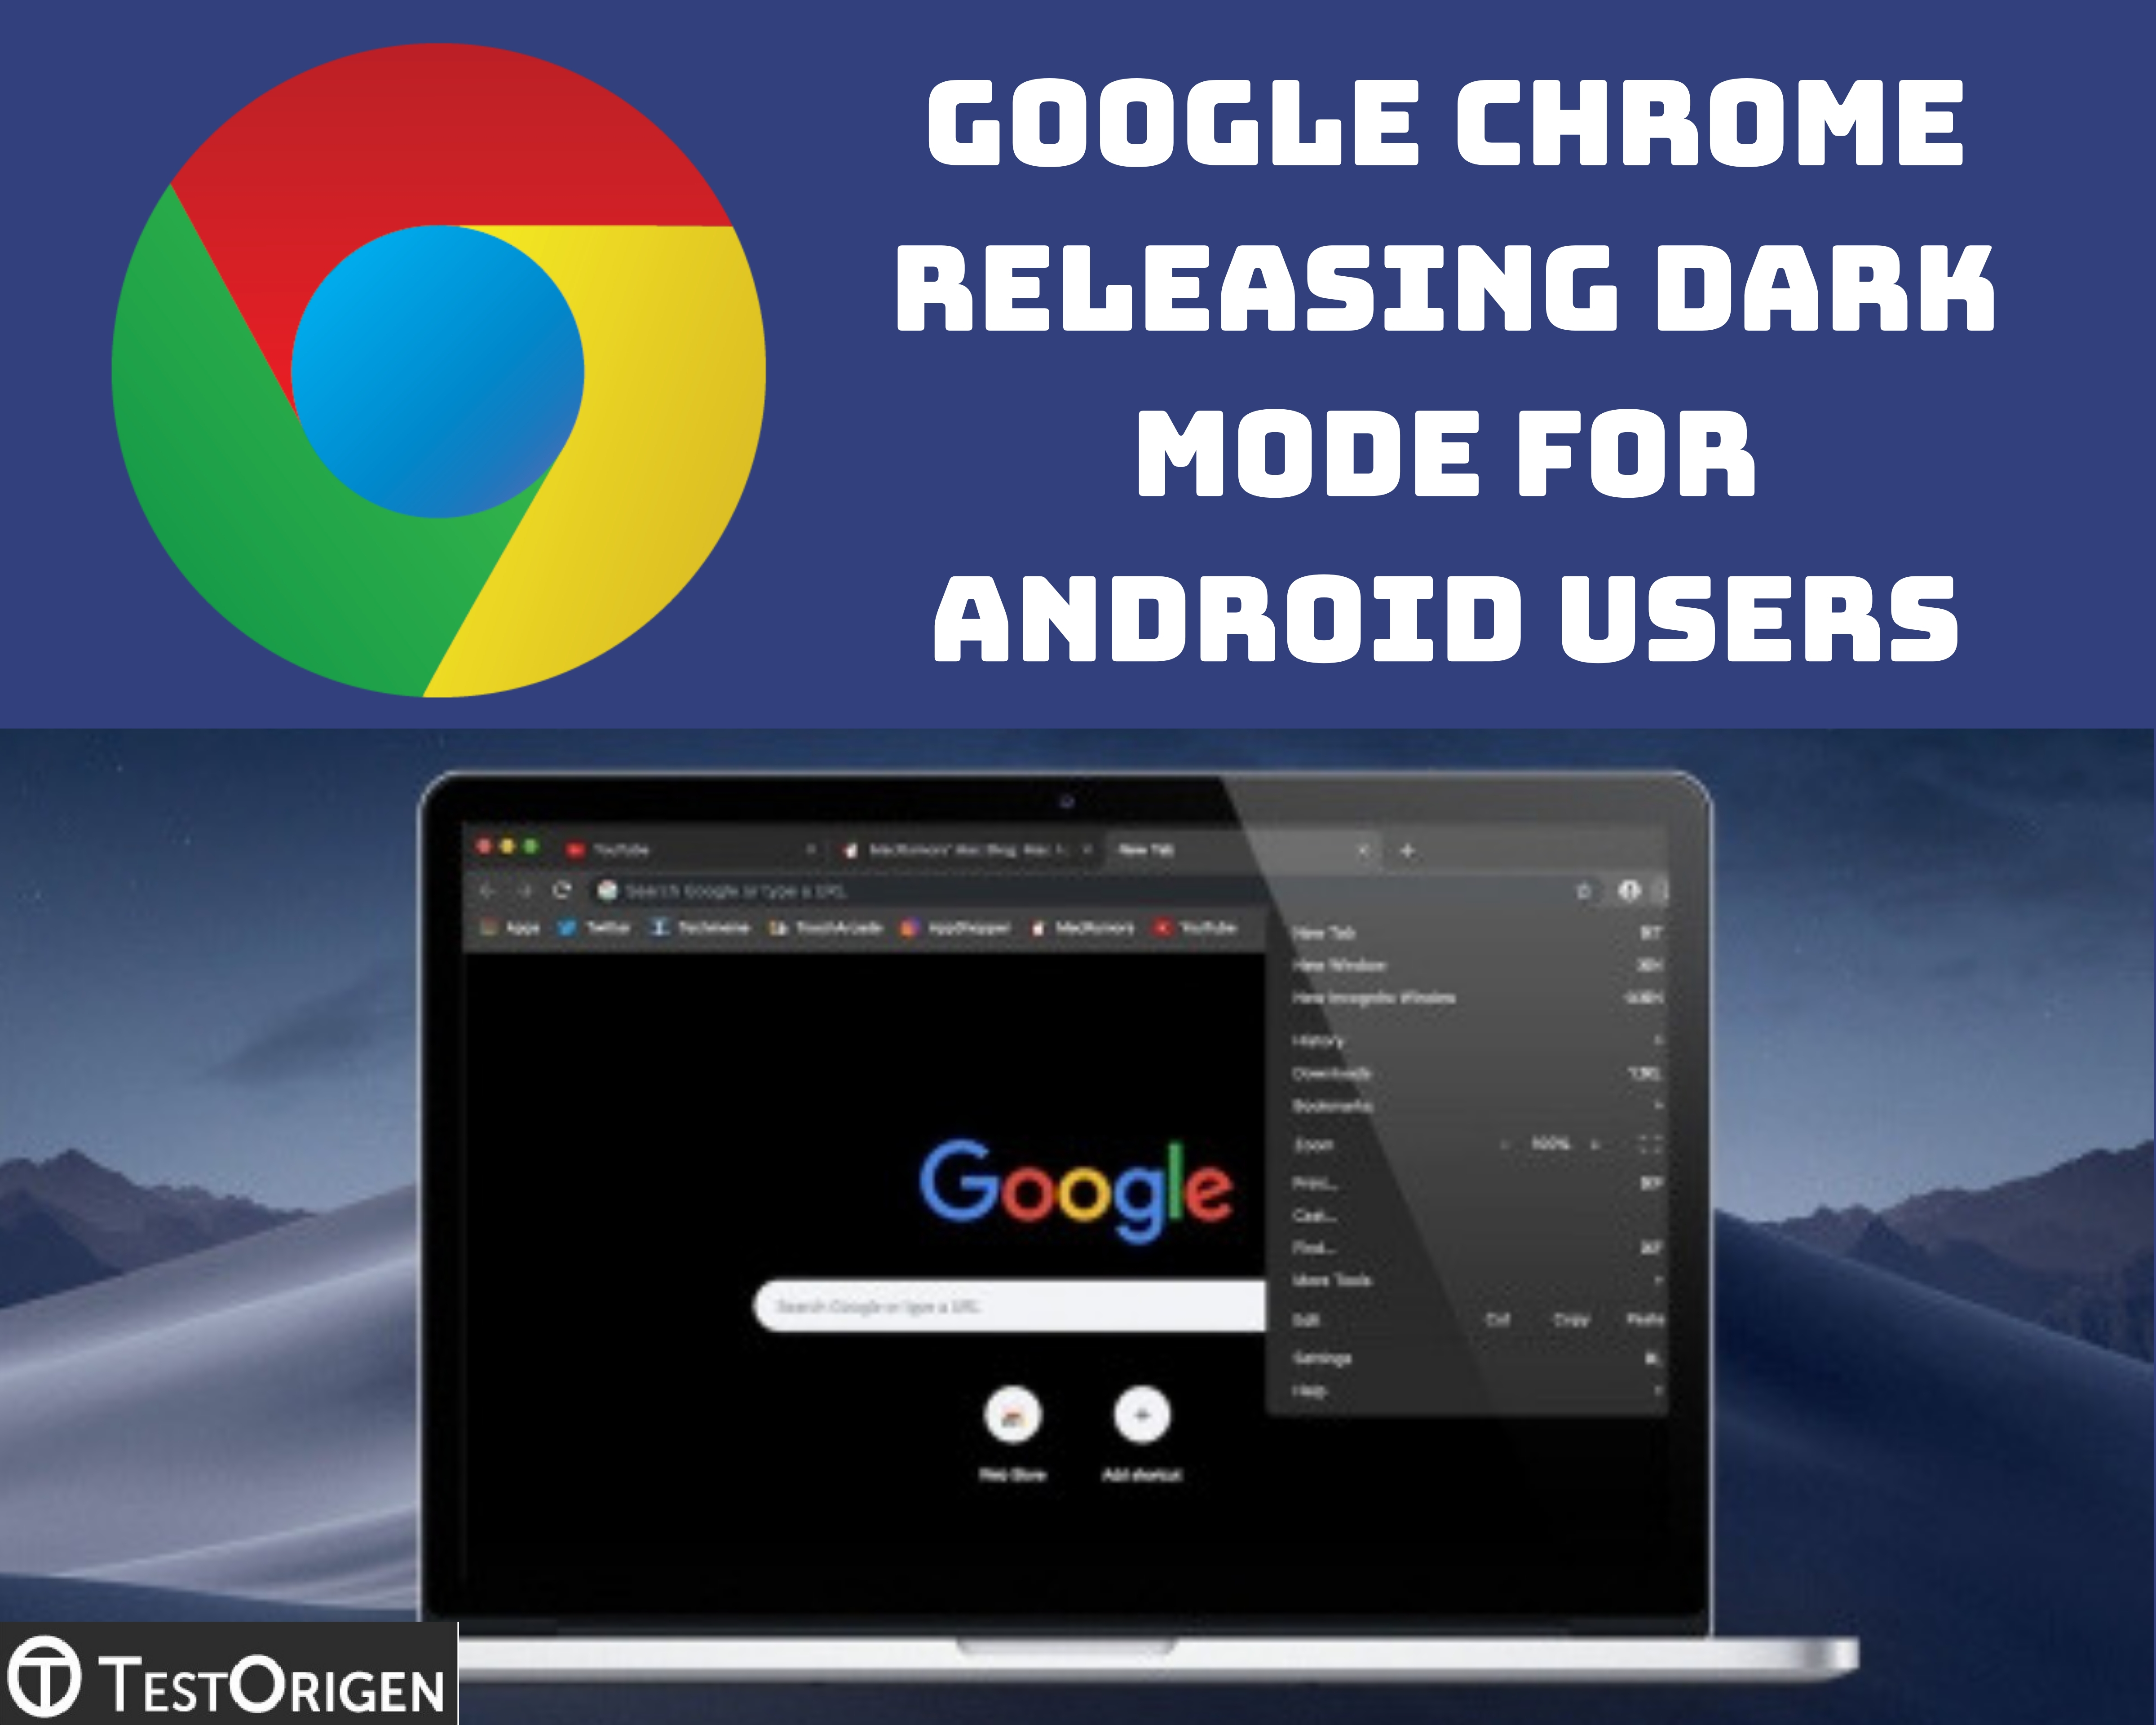 Google Chrome Releasing Dark Mode for Android Users. Google Chrome 